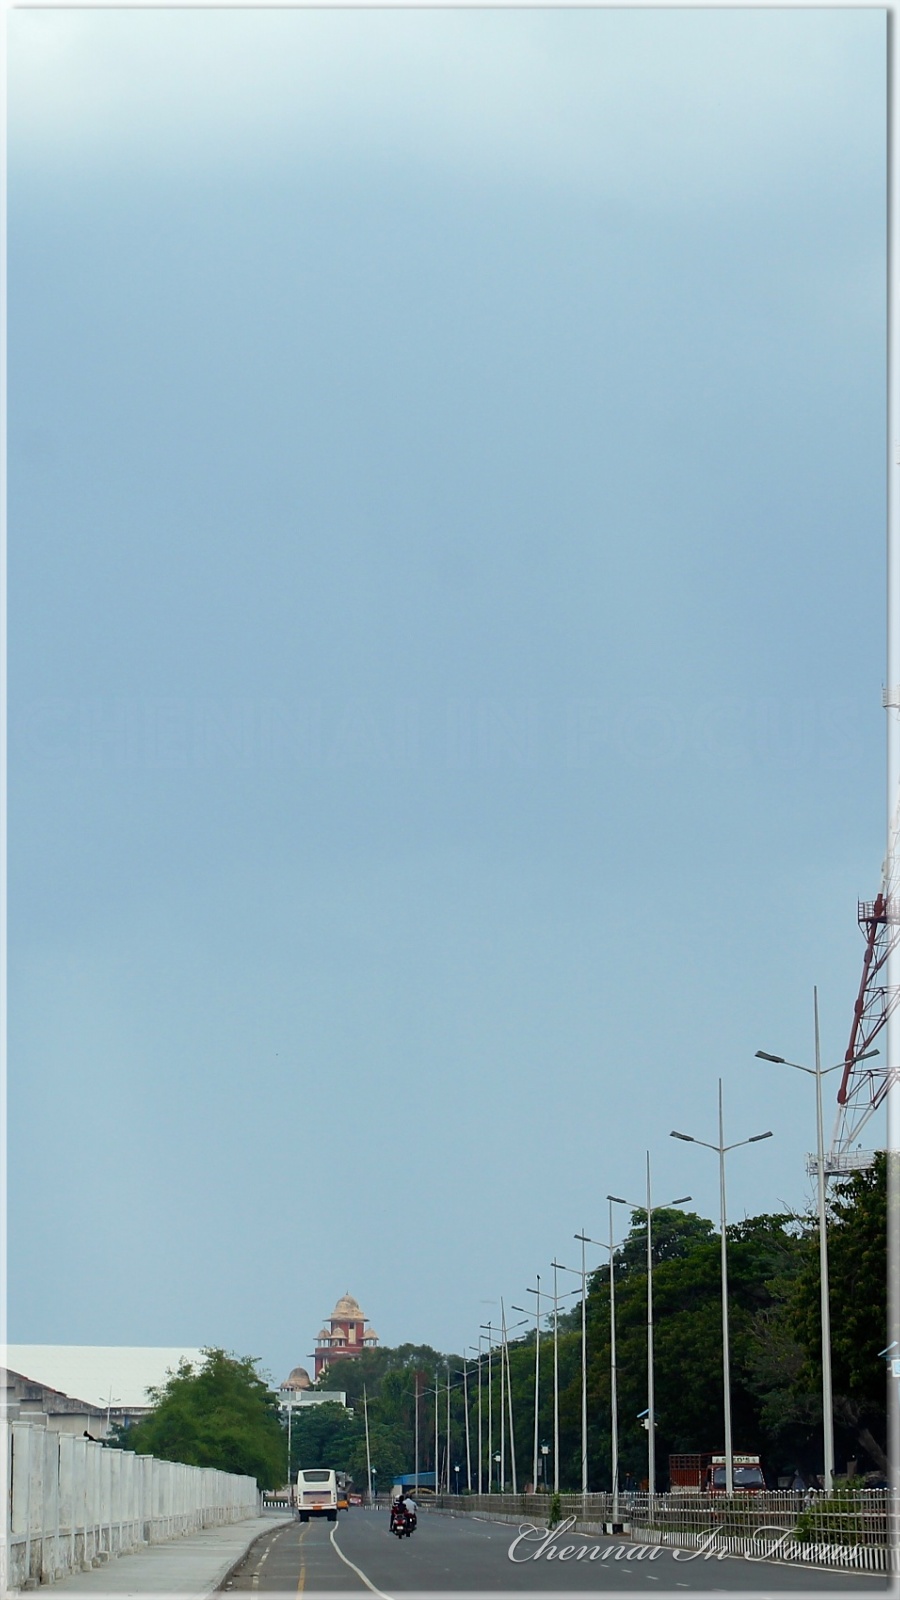 Chennai Cityscape - Tv Tower